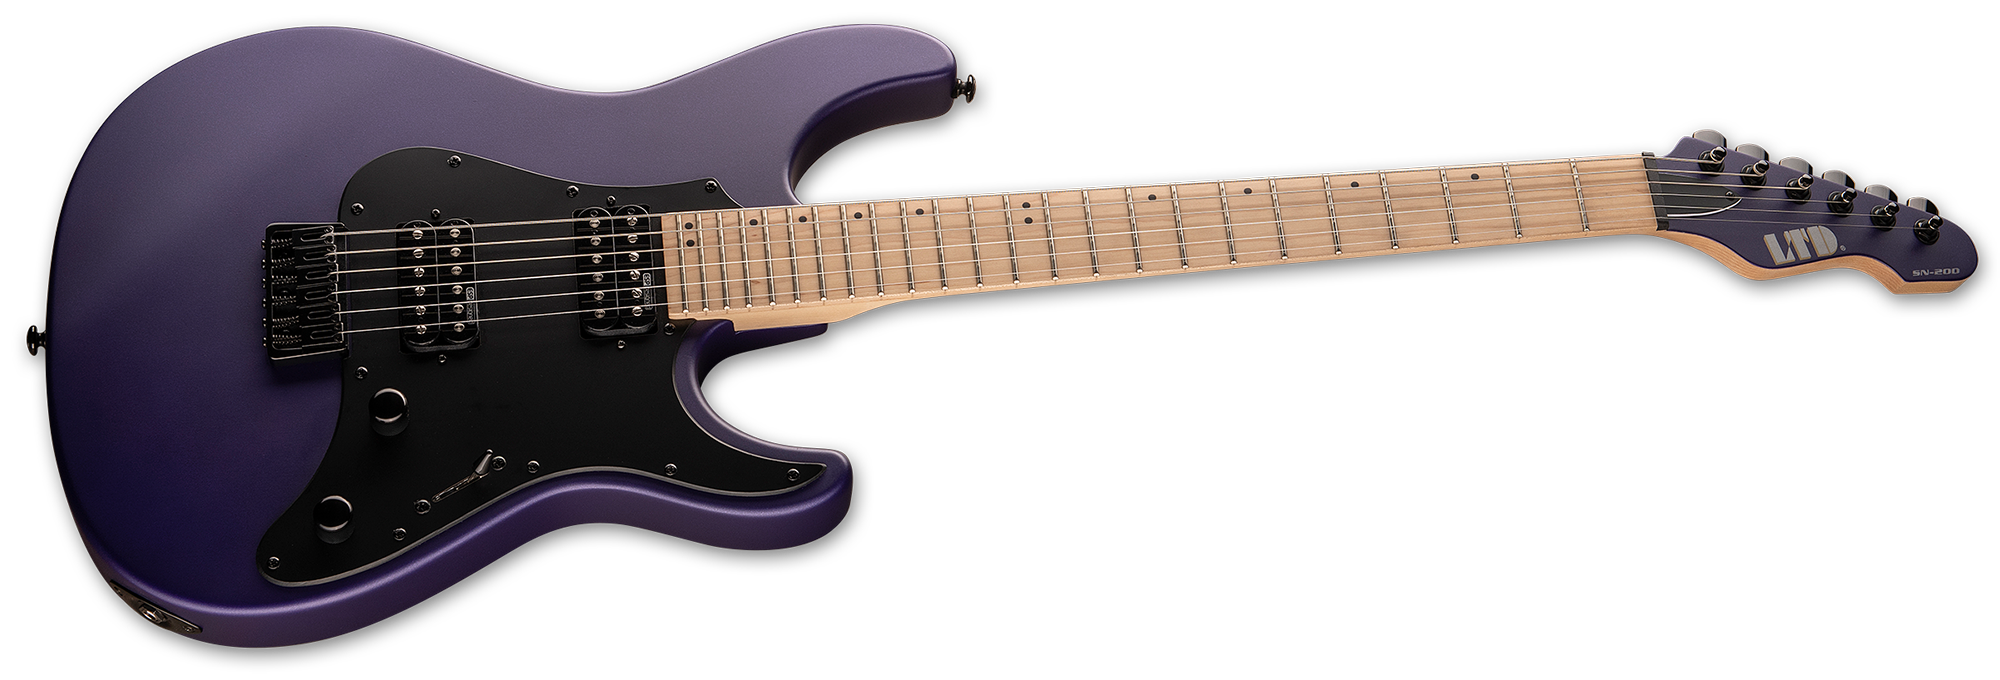 Ltd Sn-200ht Hh Ht Mn - Dark Metallic Purple Satin - Guitare Électrique Forme Str - Variation 1